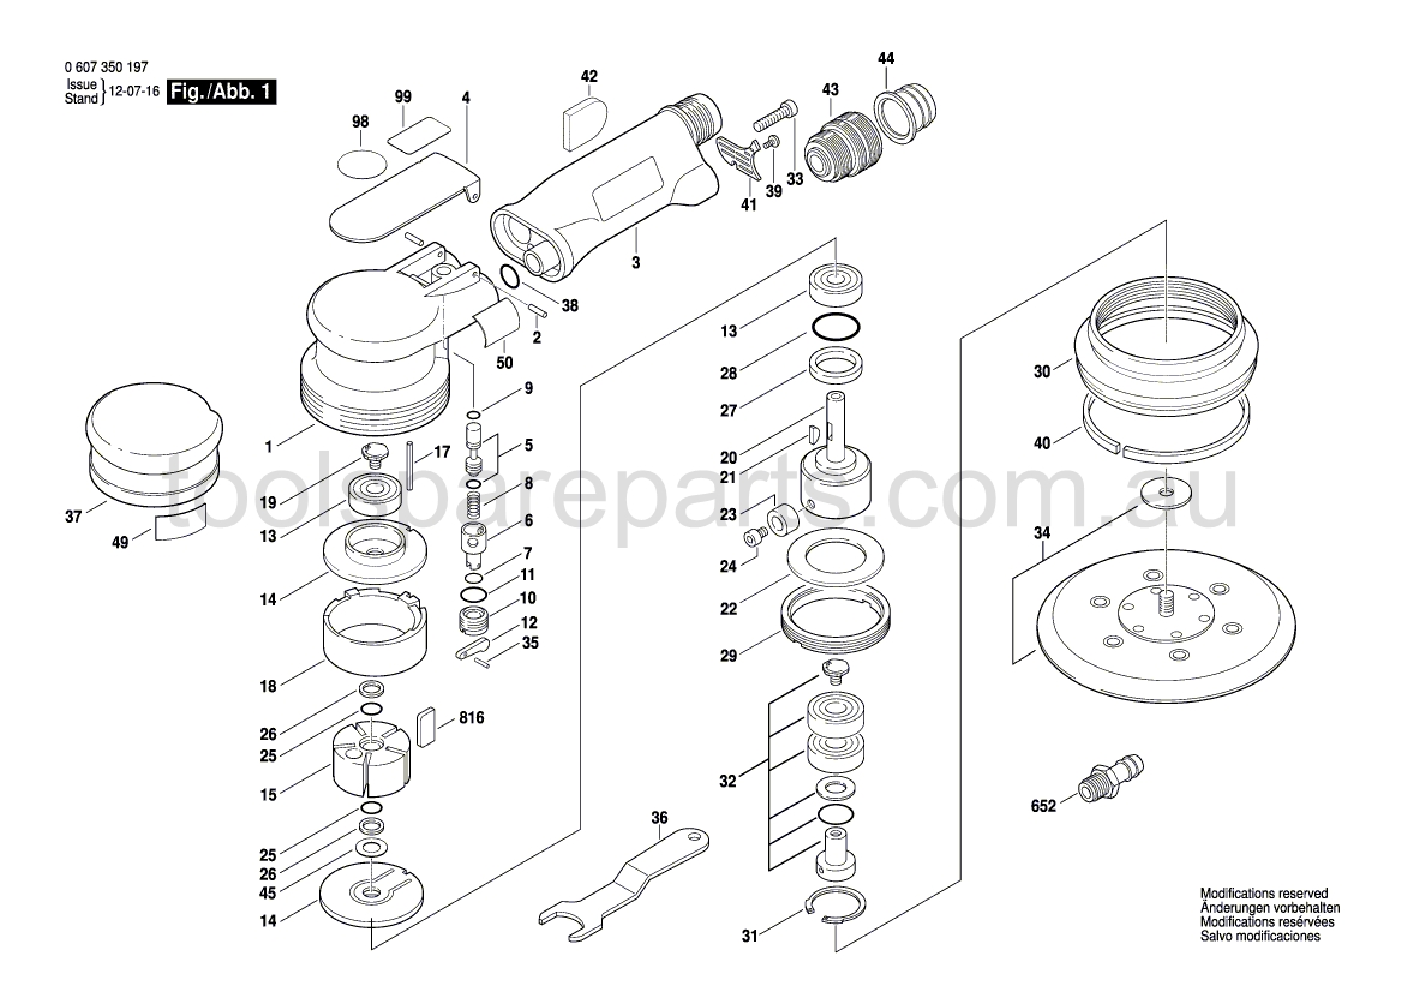 Bosch 170 WATT-SERIE 0607350197  Diagram 1